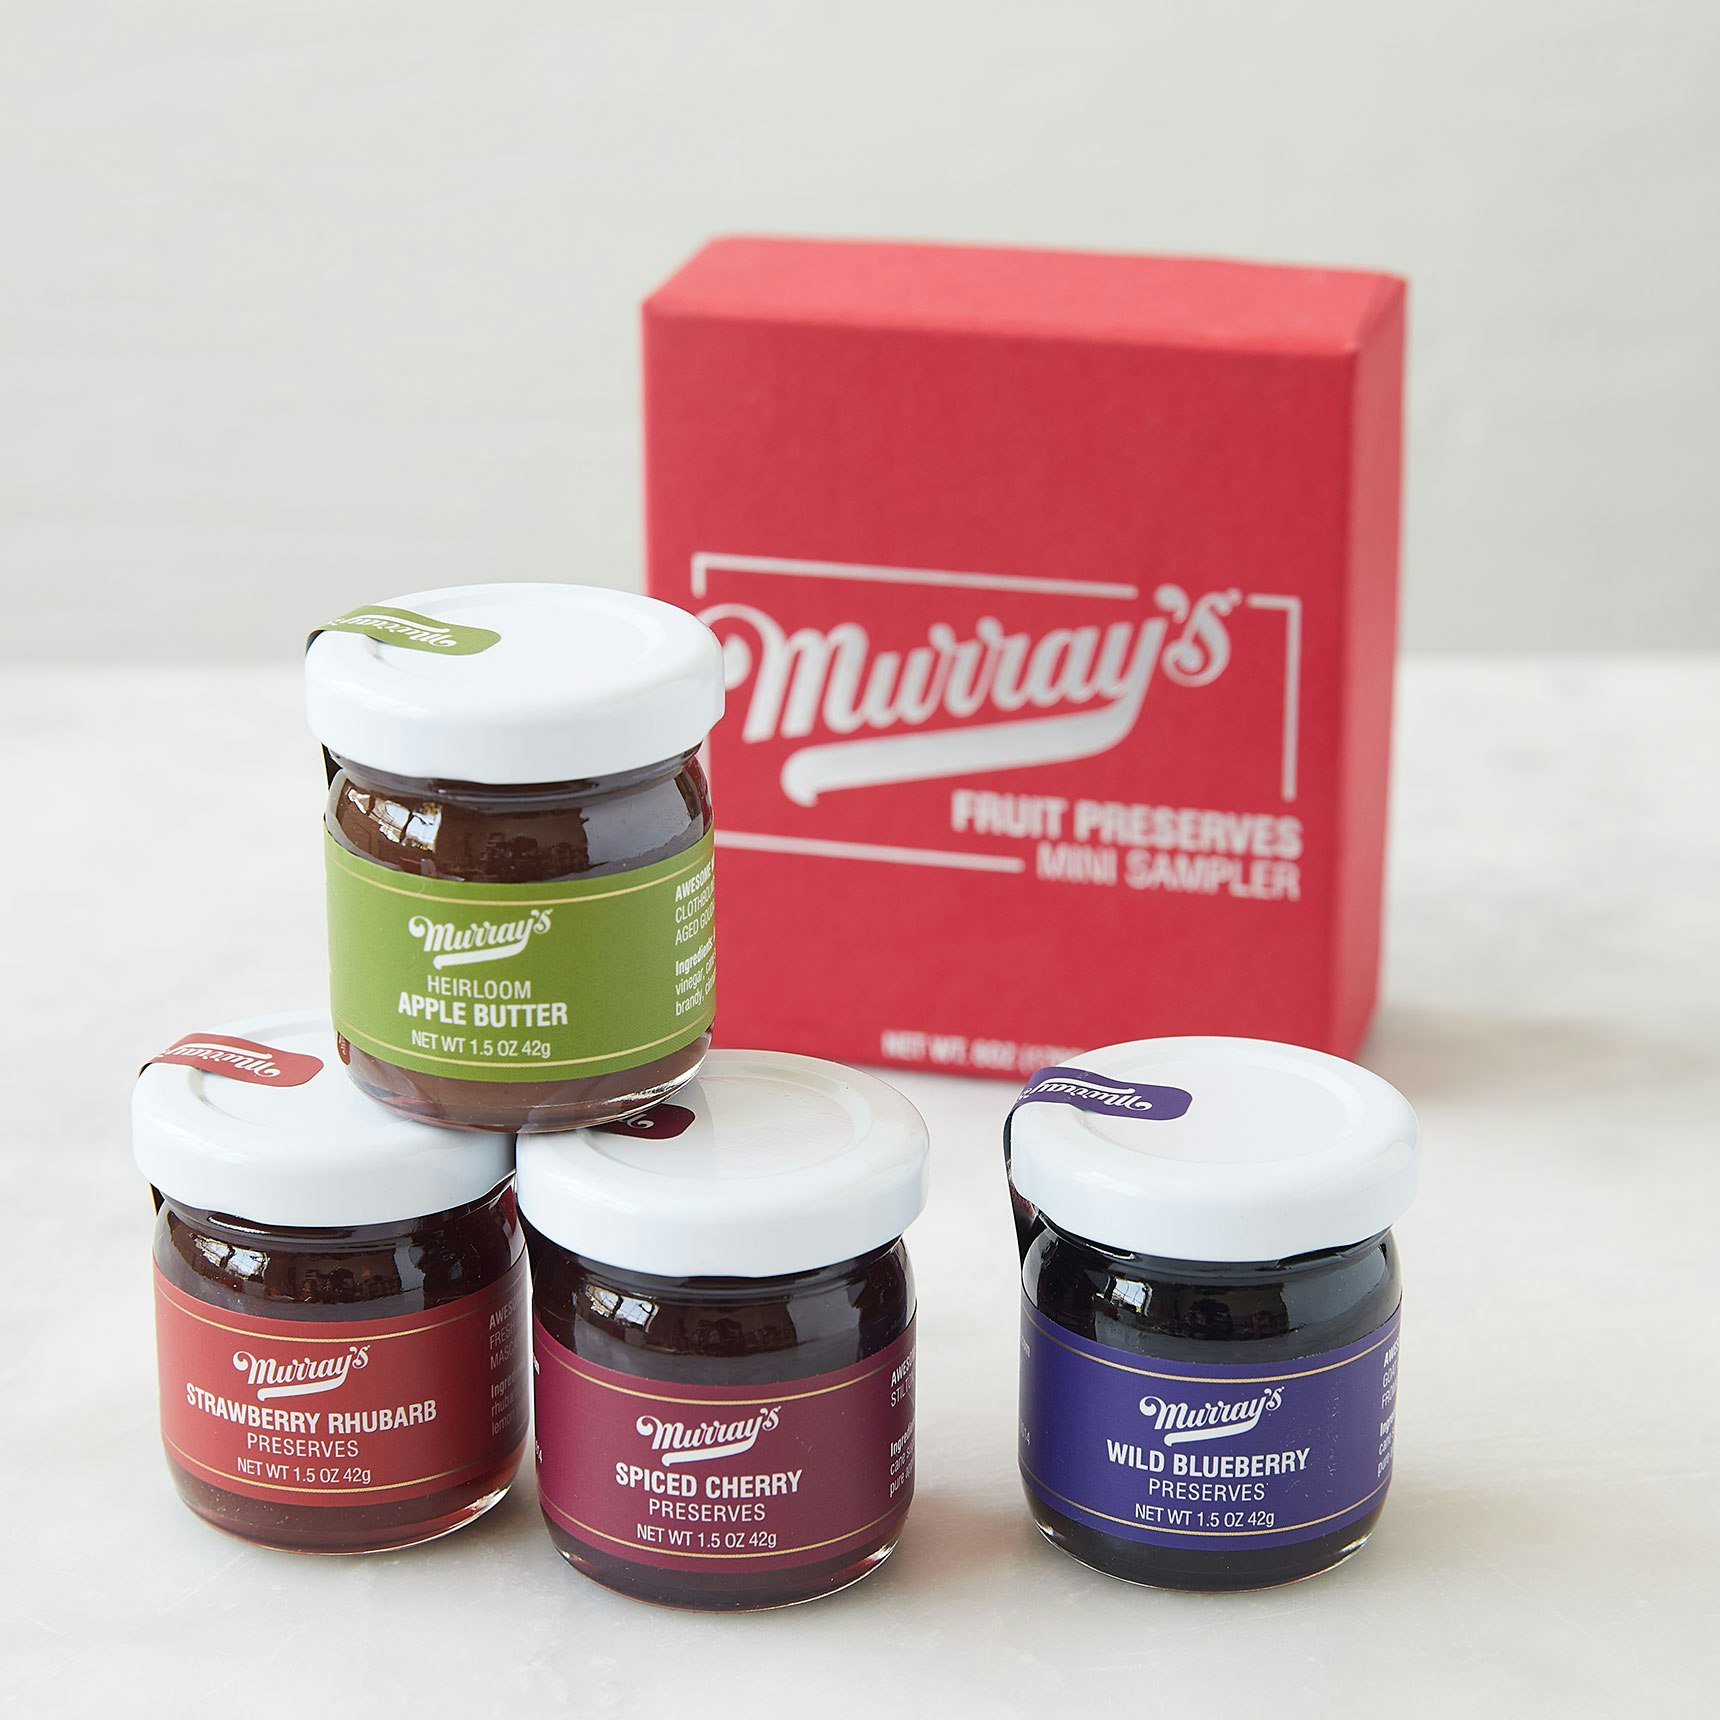 murrays fruit preserves mini sampler 4 pack specialty foods